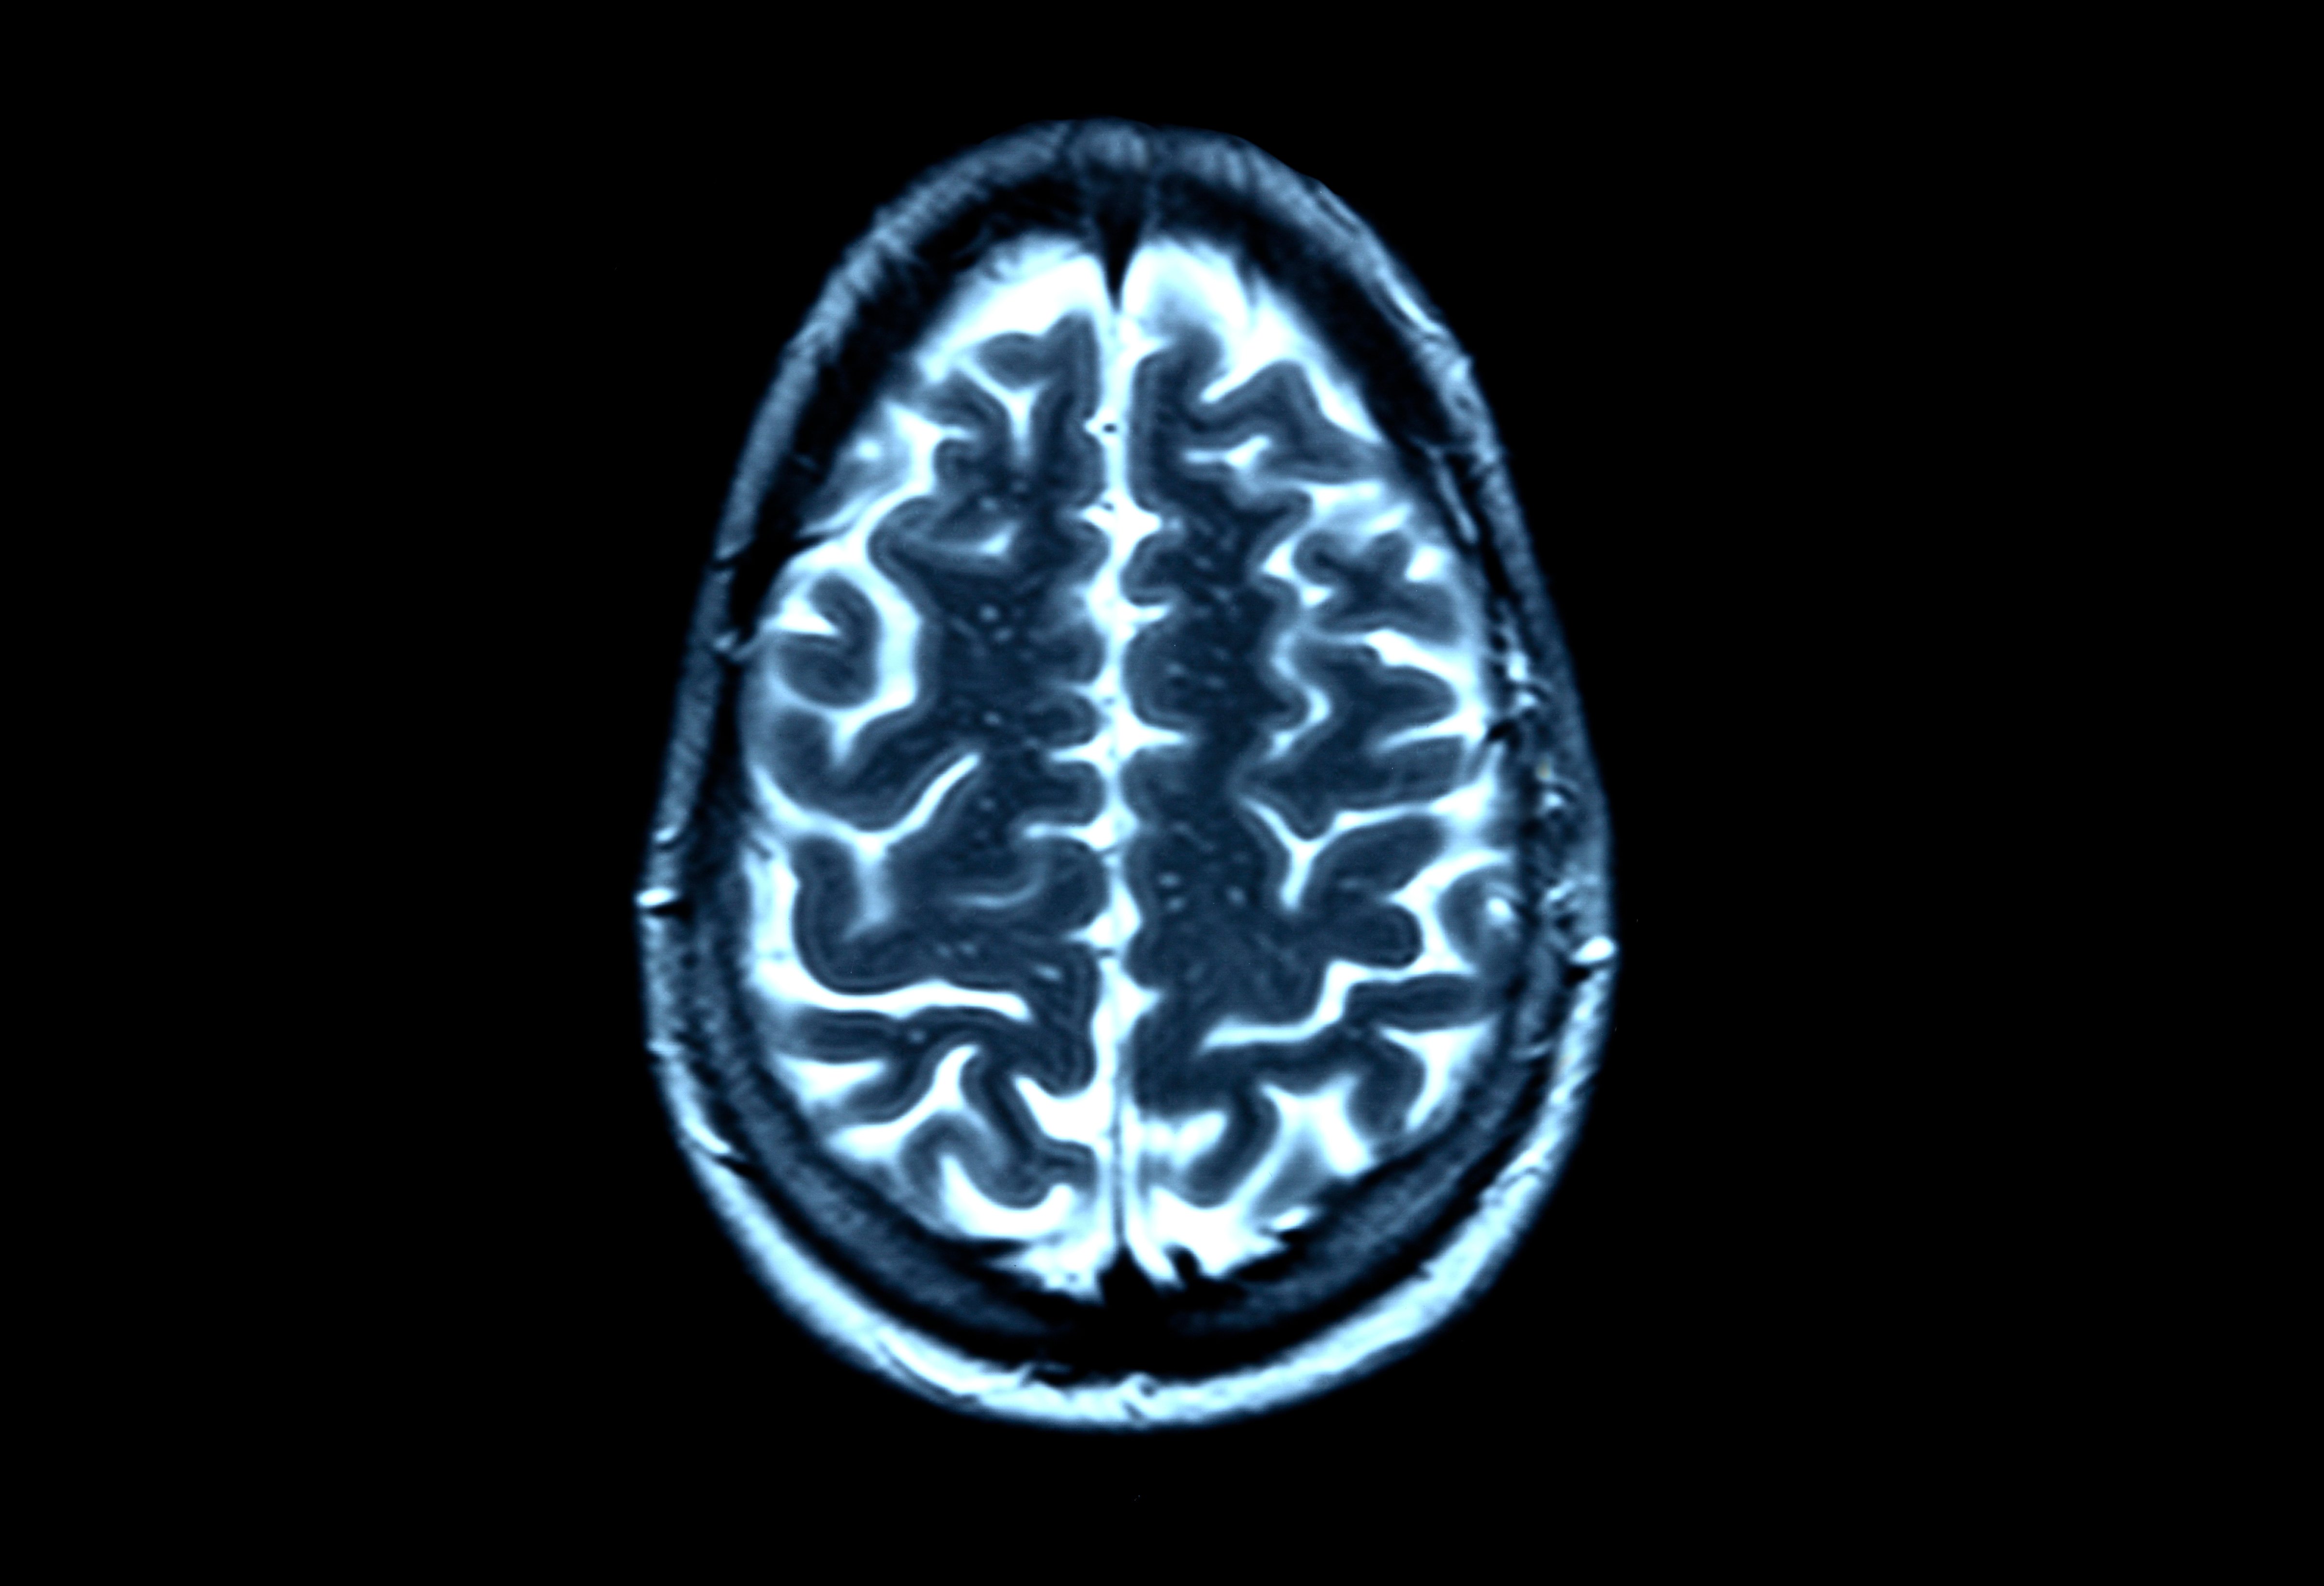 Brain scan, MRI scan